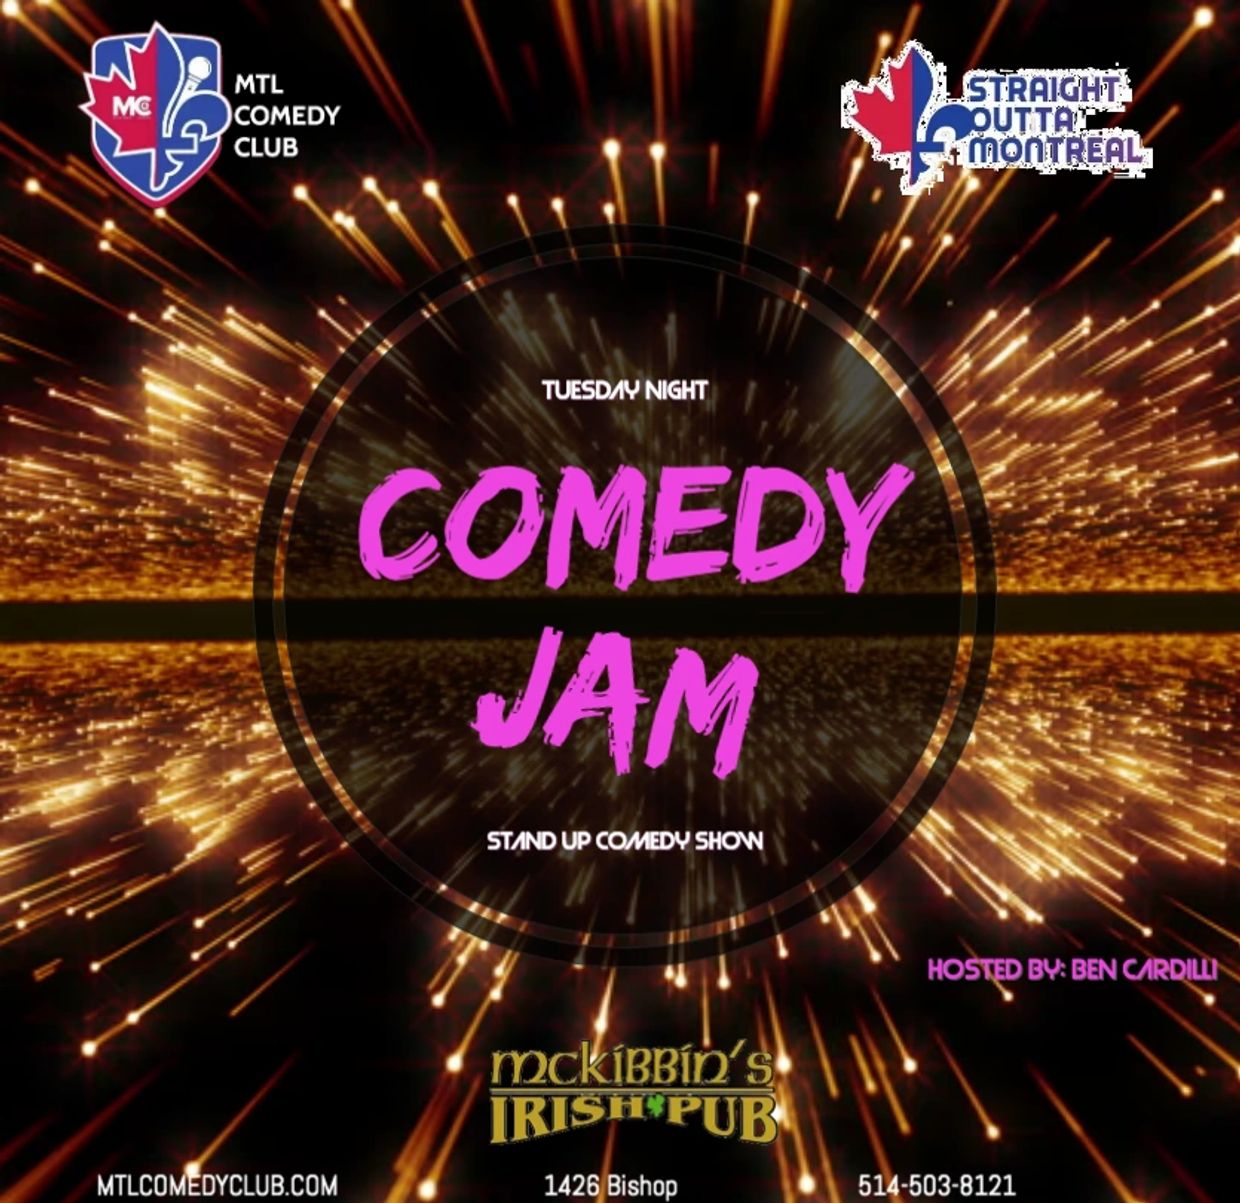 Mckibbin’s Comedy Jam: Unleash Laughter at MONTREAL's Premier Venue!
montrealjokes.com